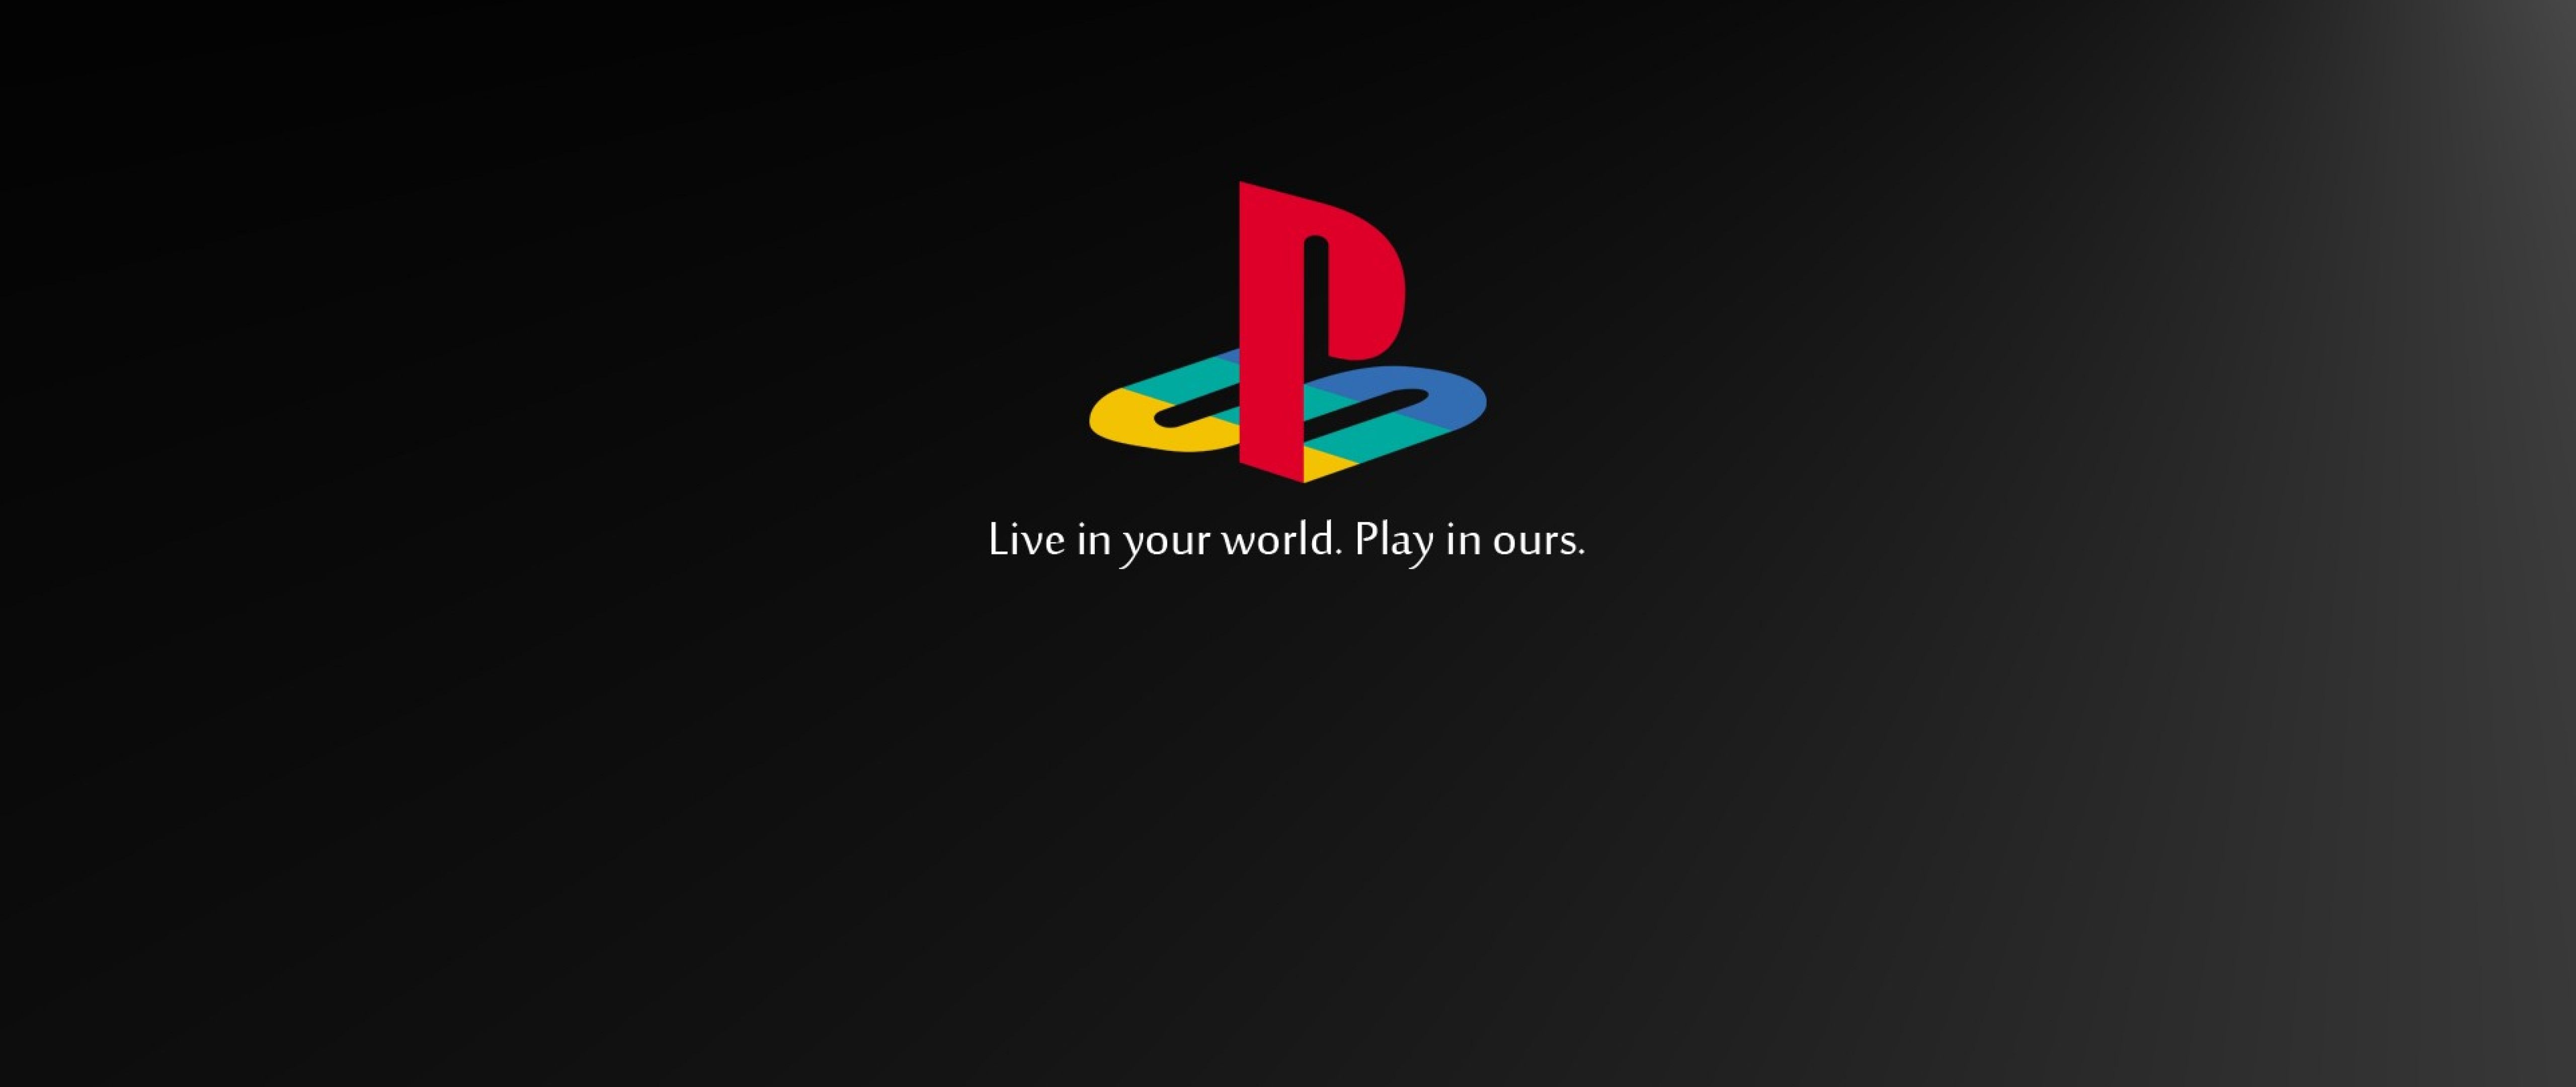 Playstation Logo HD Wallpaper for Desktop and Mobiles 4K Ultra HD